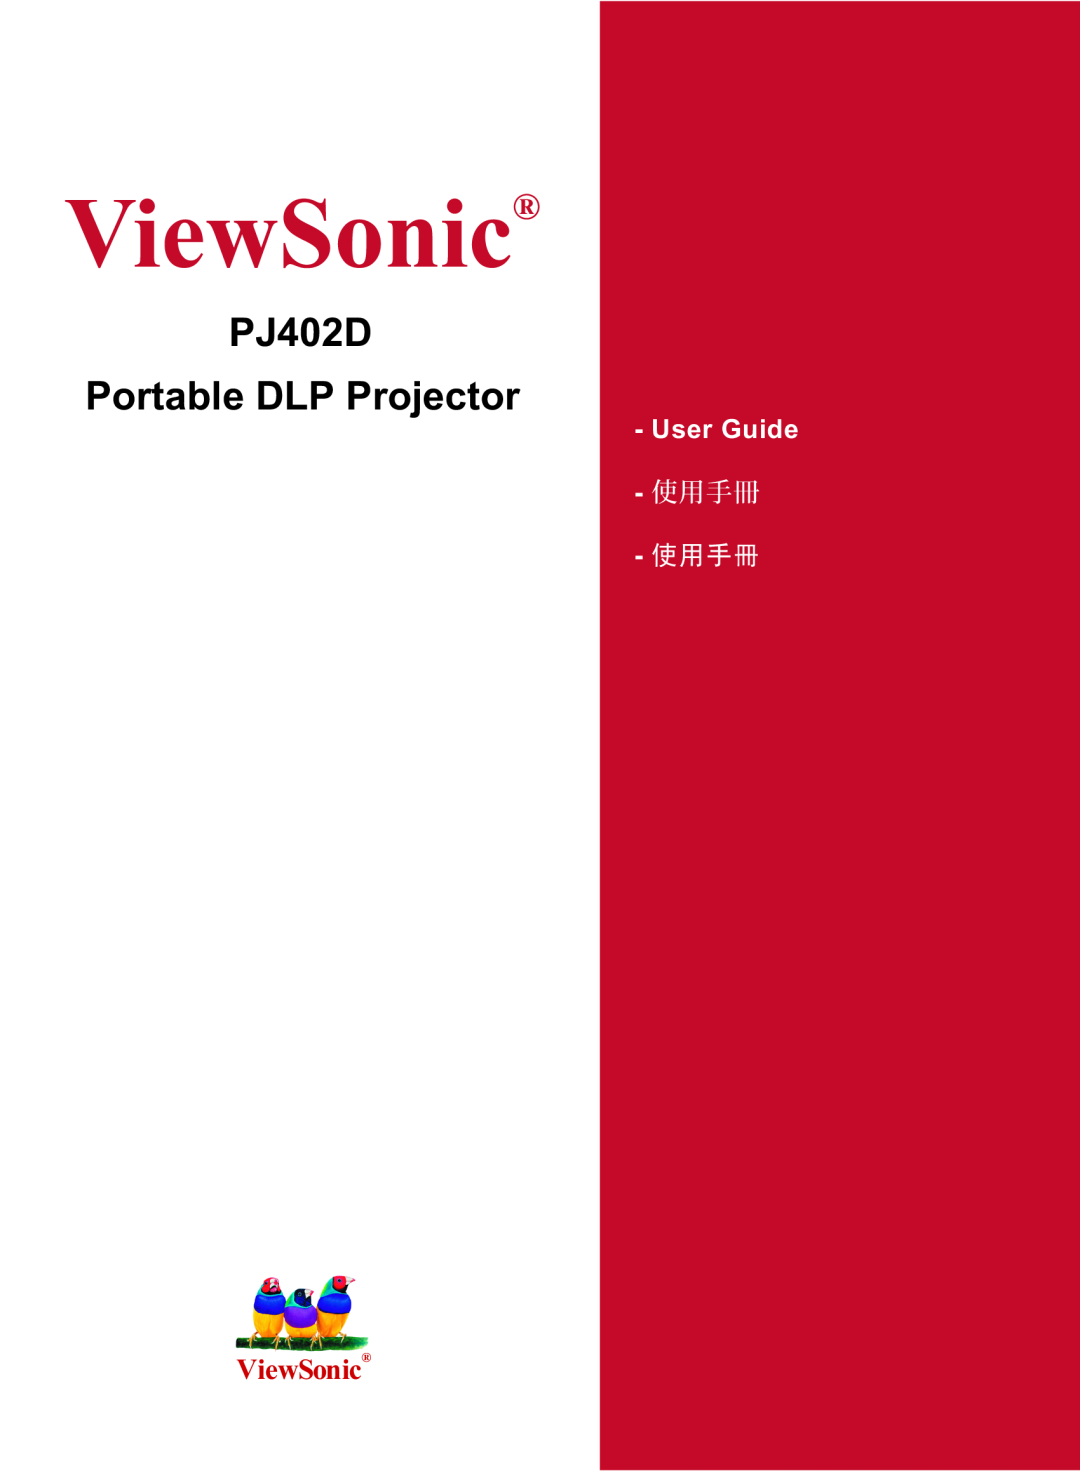 ViewSonic PJ402D manual 9LHZ6RQLFŠ, 3- Portable DLP3URMHFWRU, 8VHU*XLGH, 使用手冊 